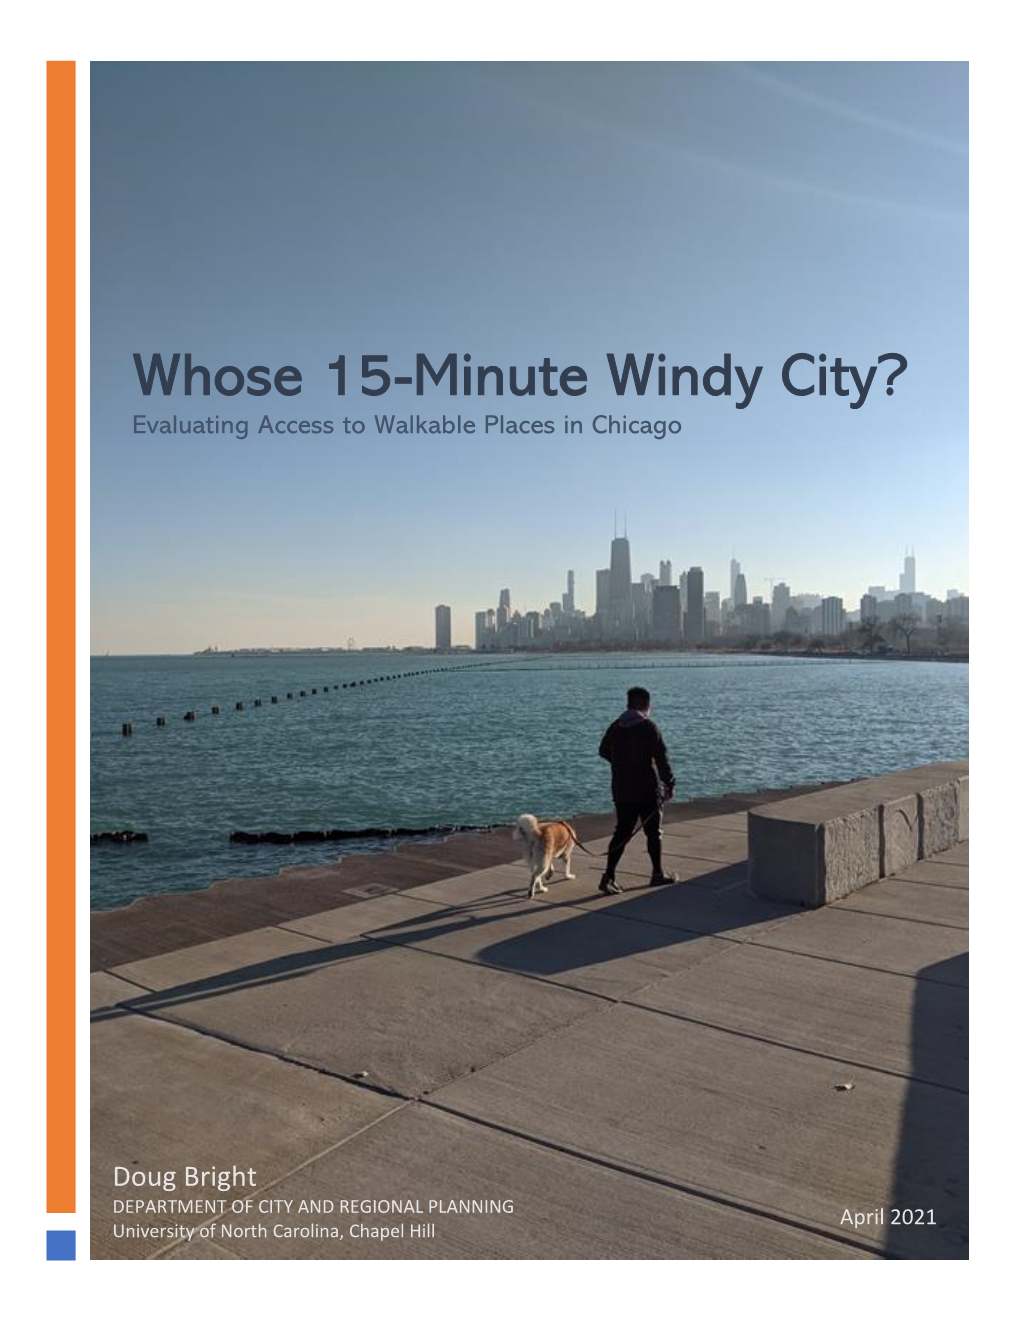 A 15-Minute Windy City